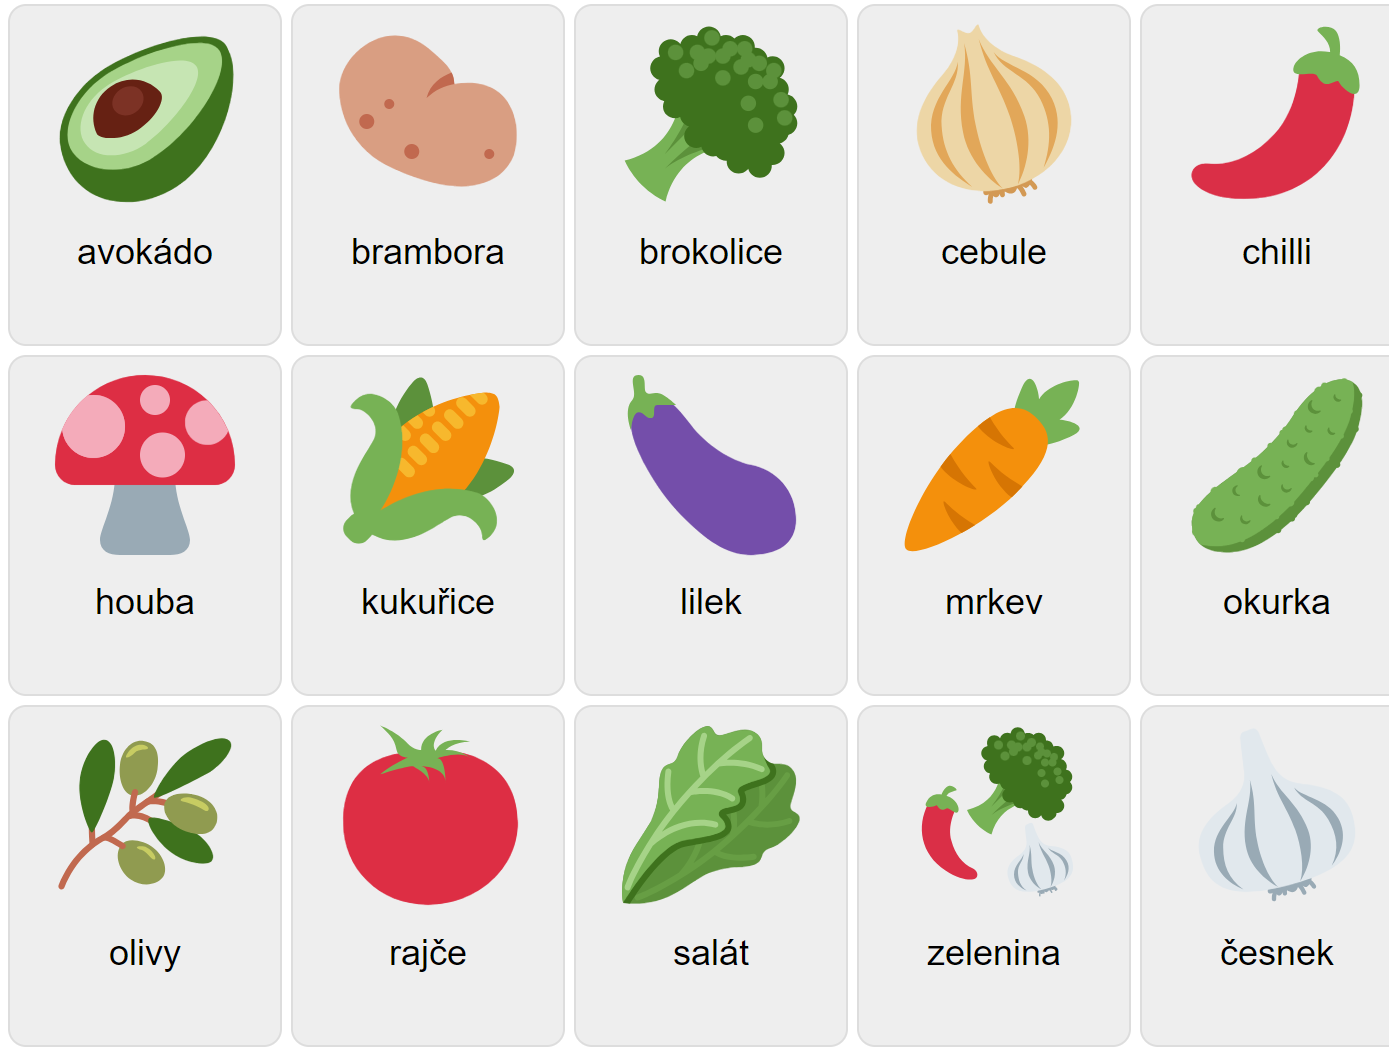 Vegetables in Czech